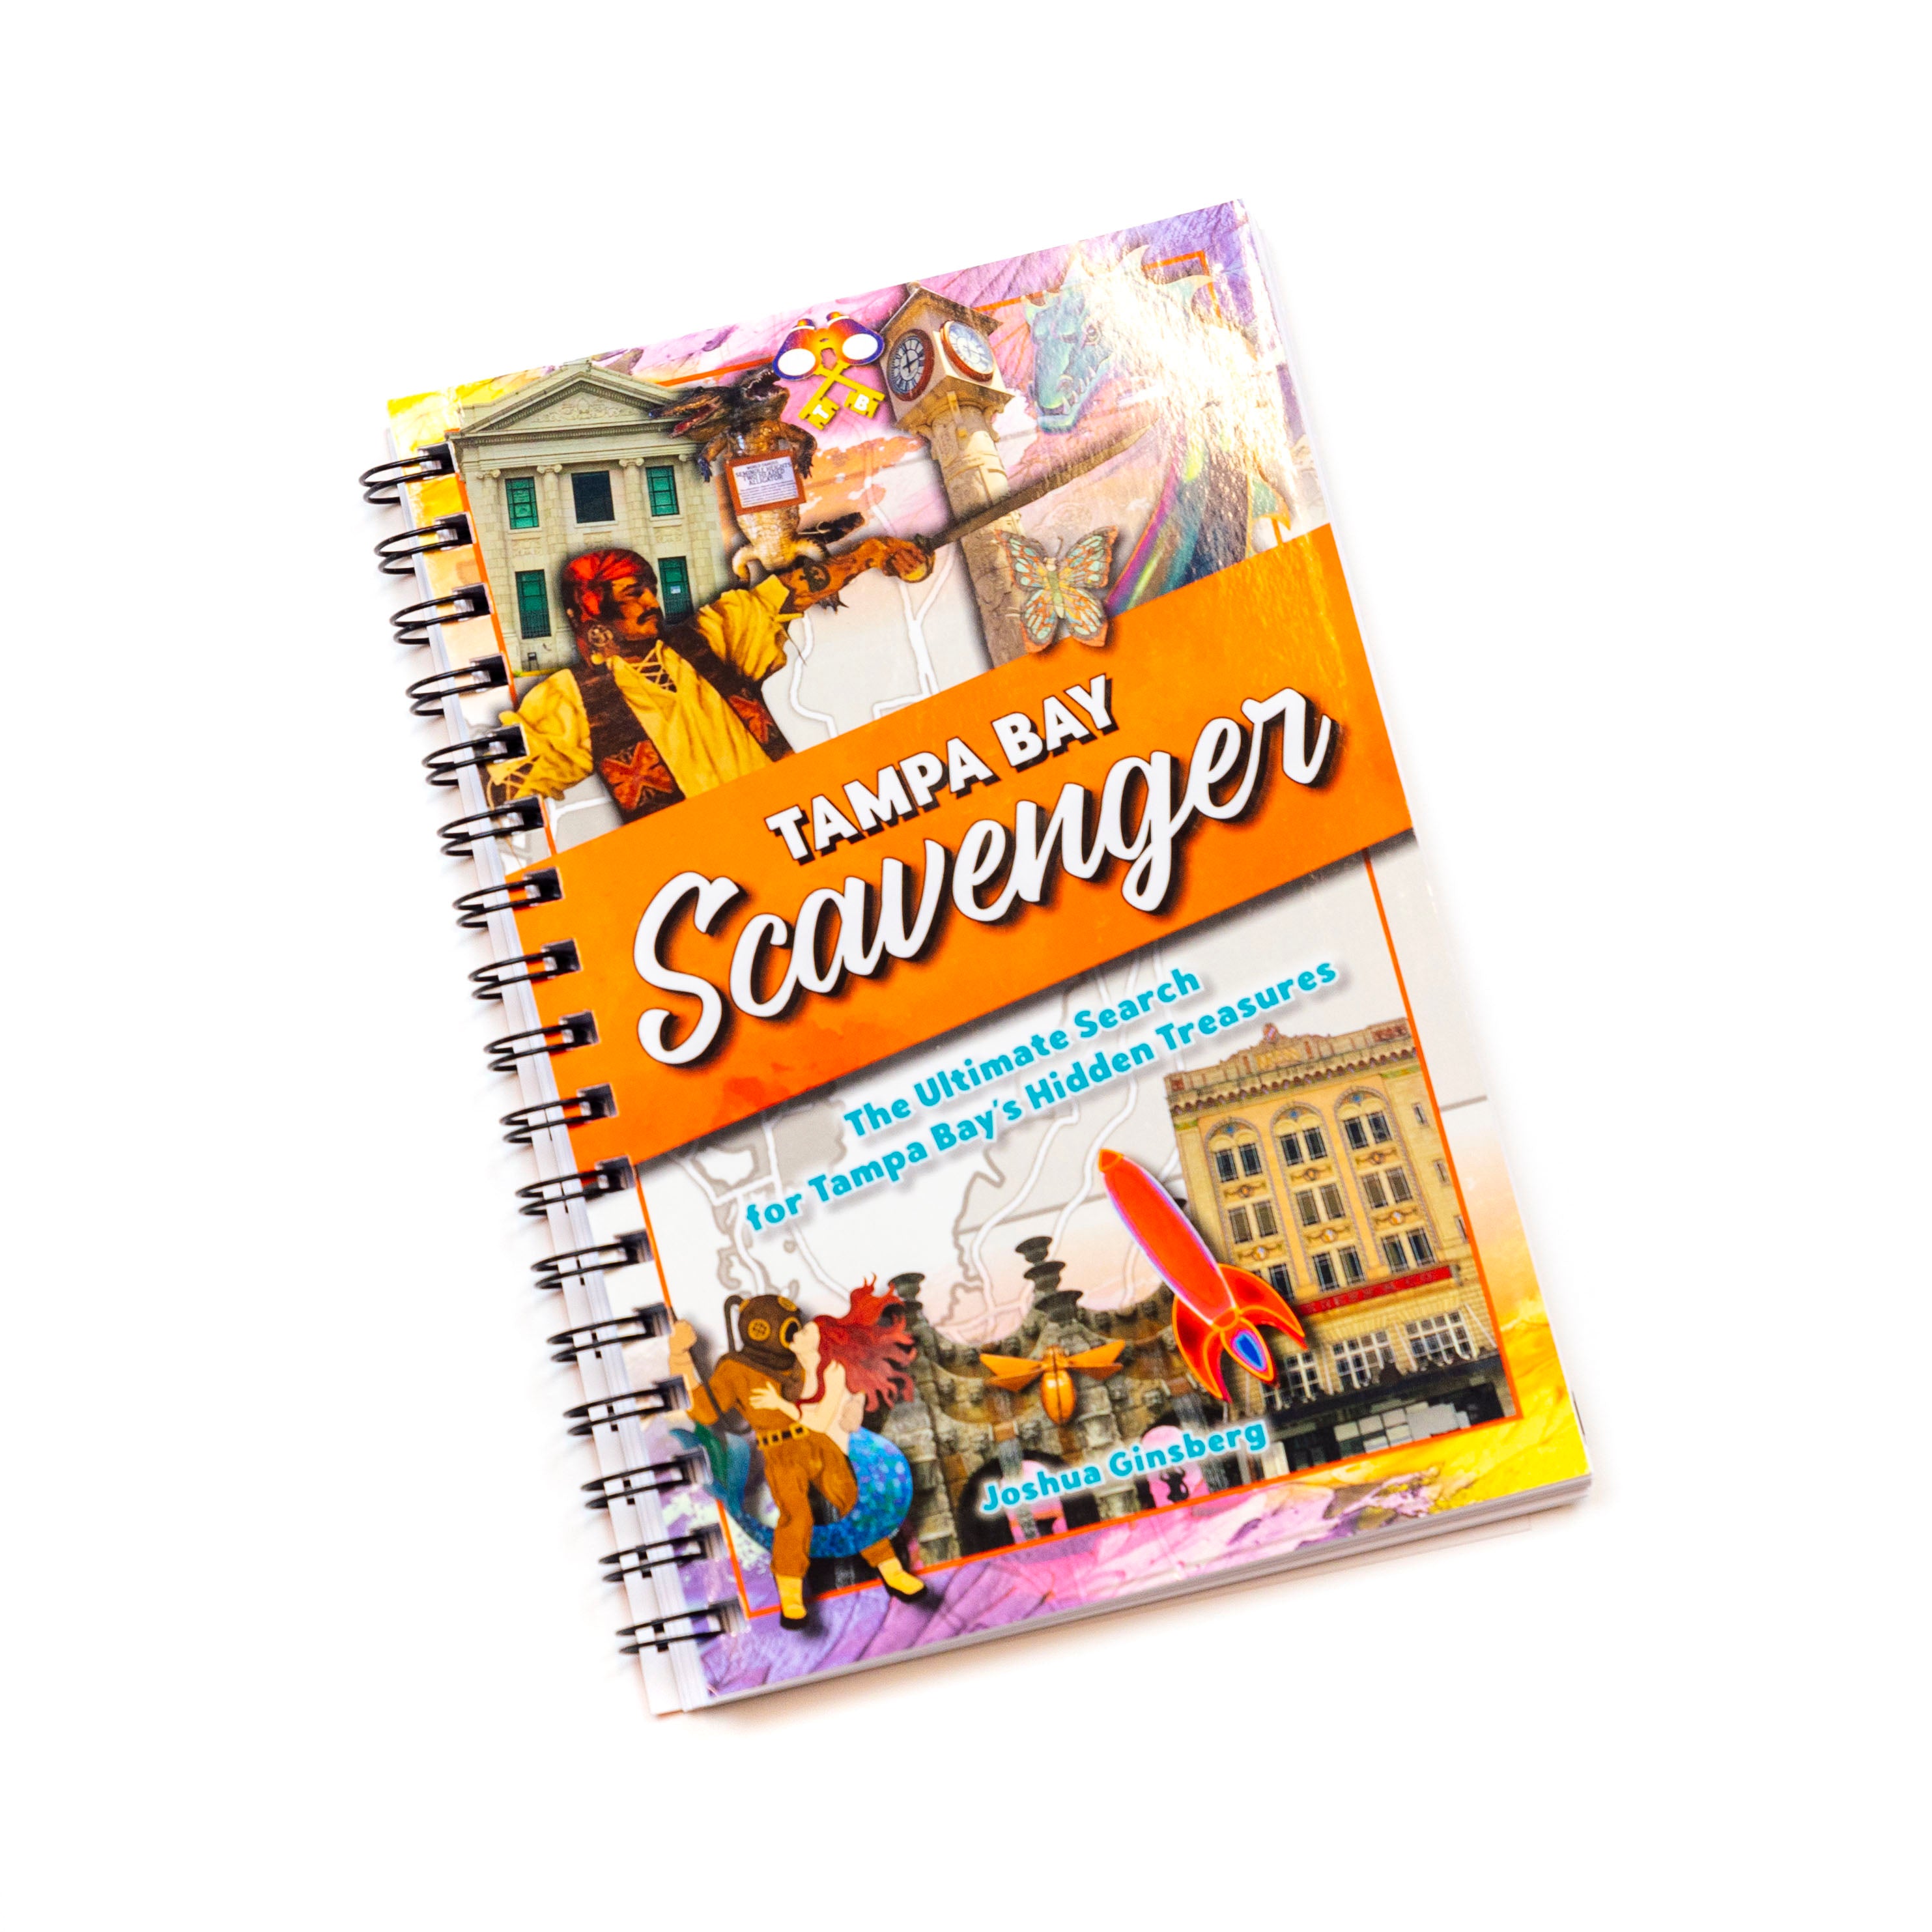 Tampa Bay Scavenger Book